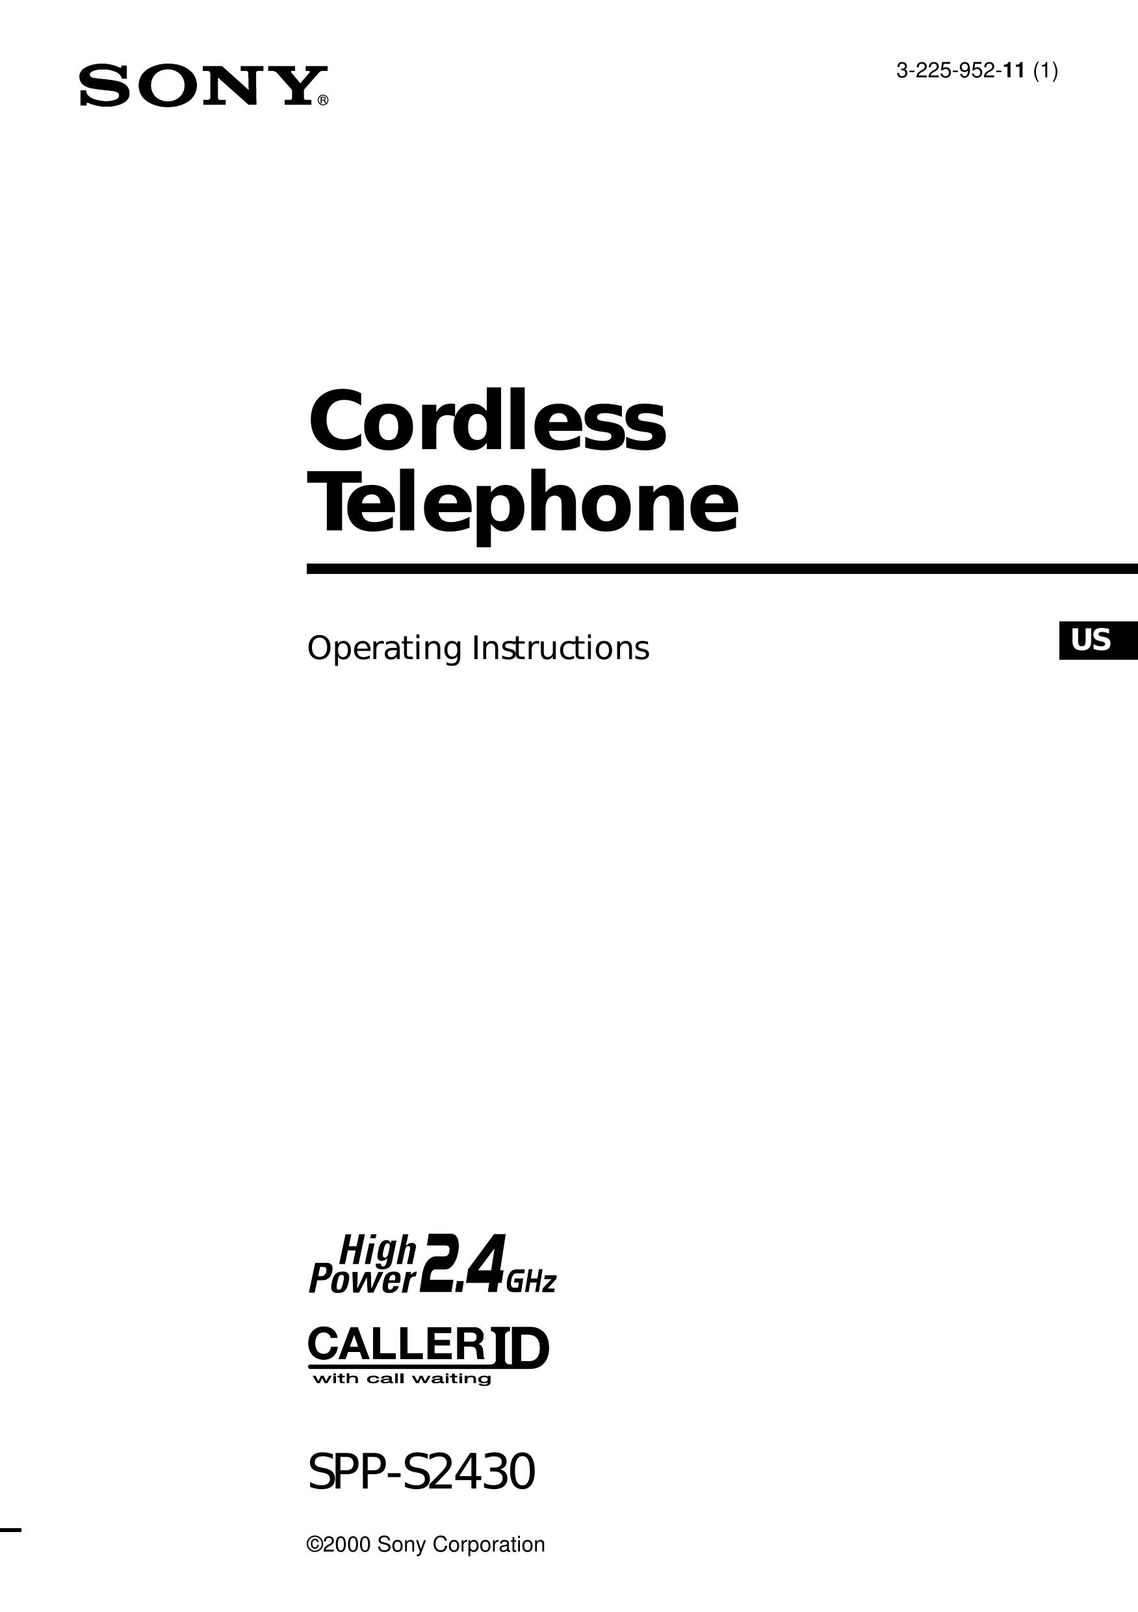 Sony spp-s2430 Cordless Telephone User Manual